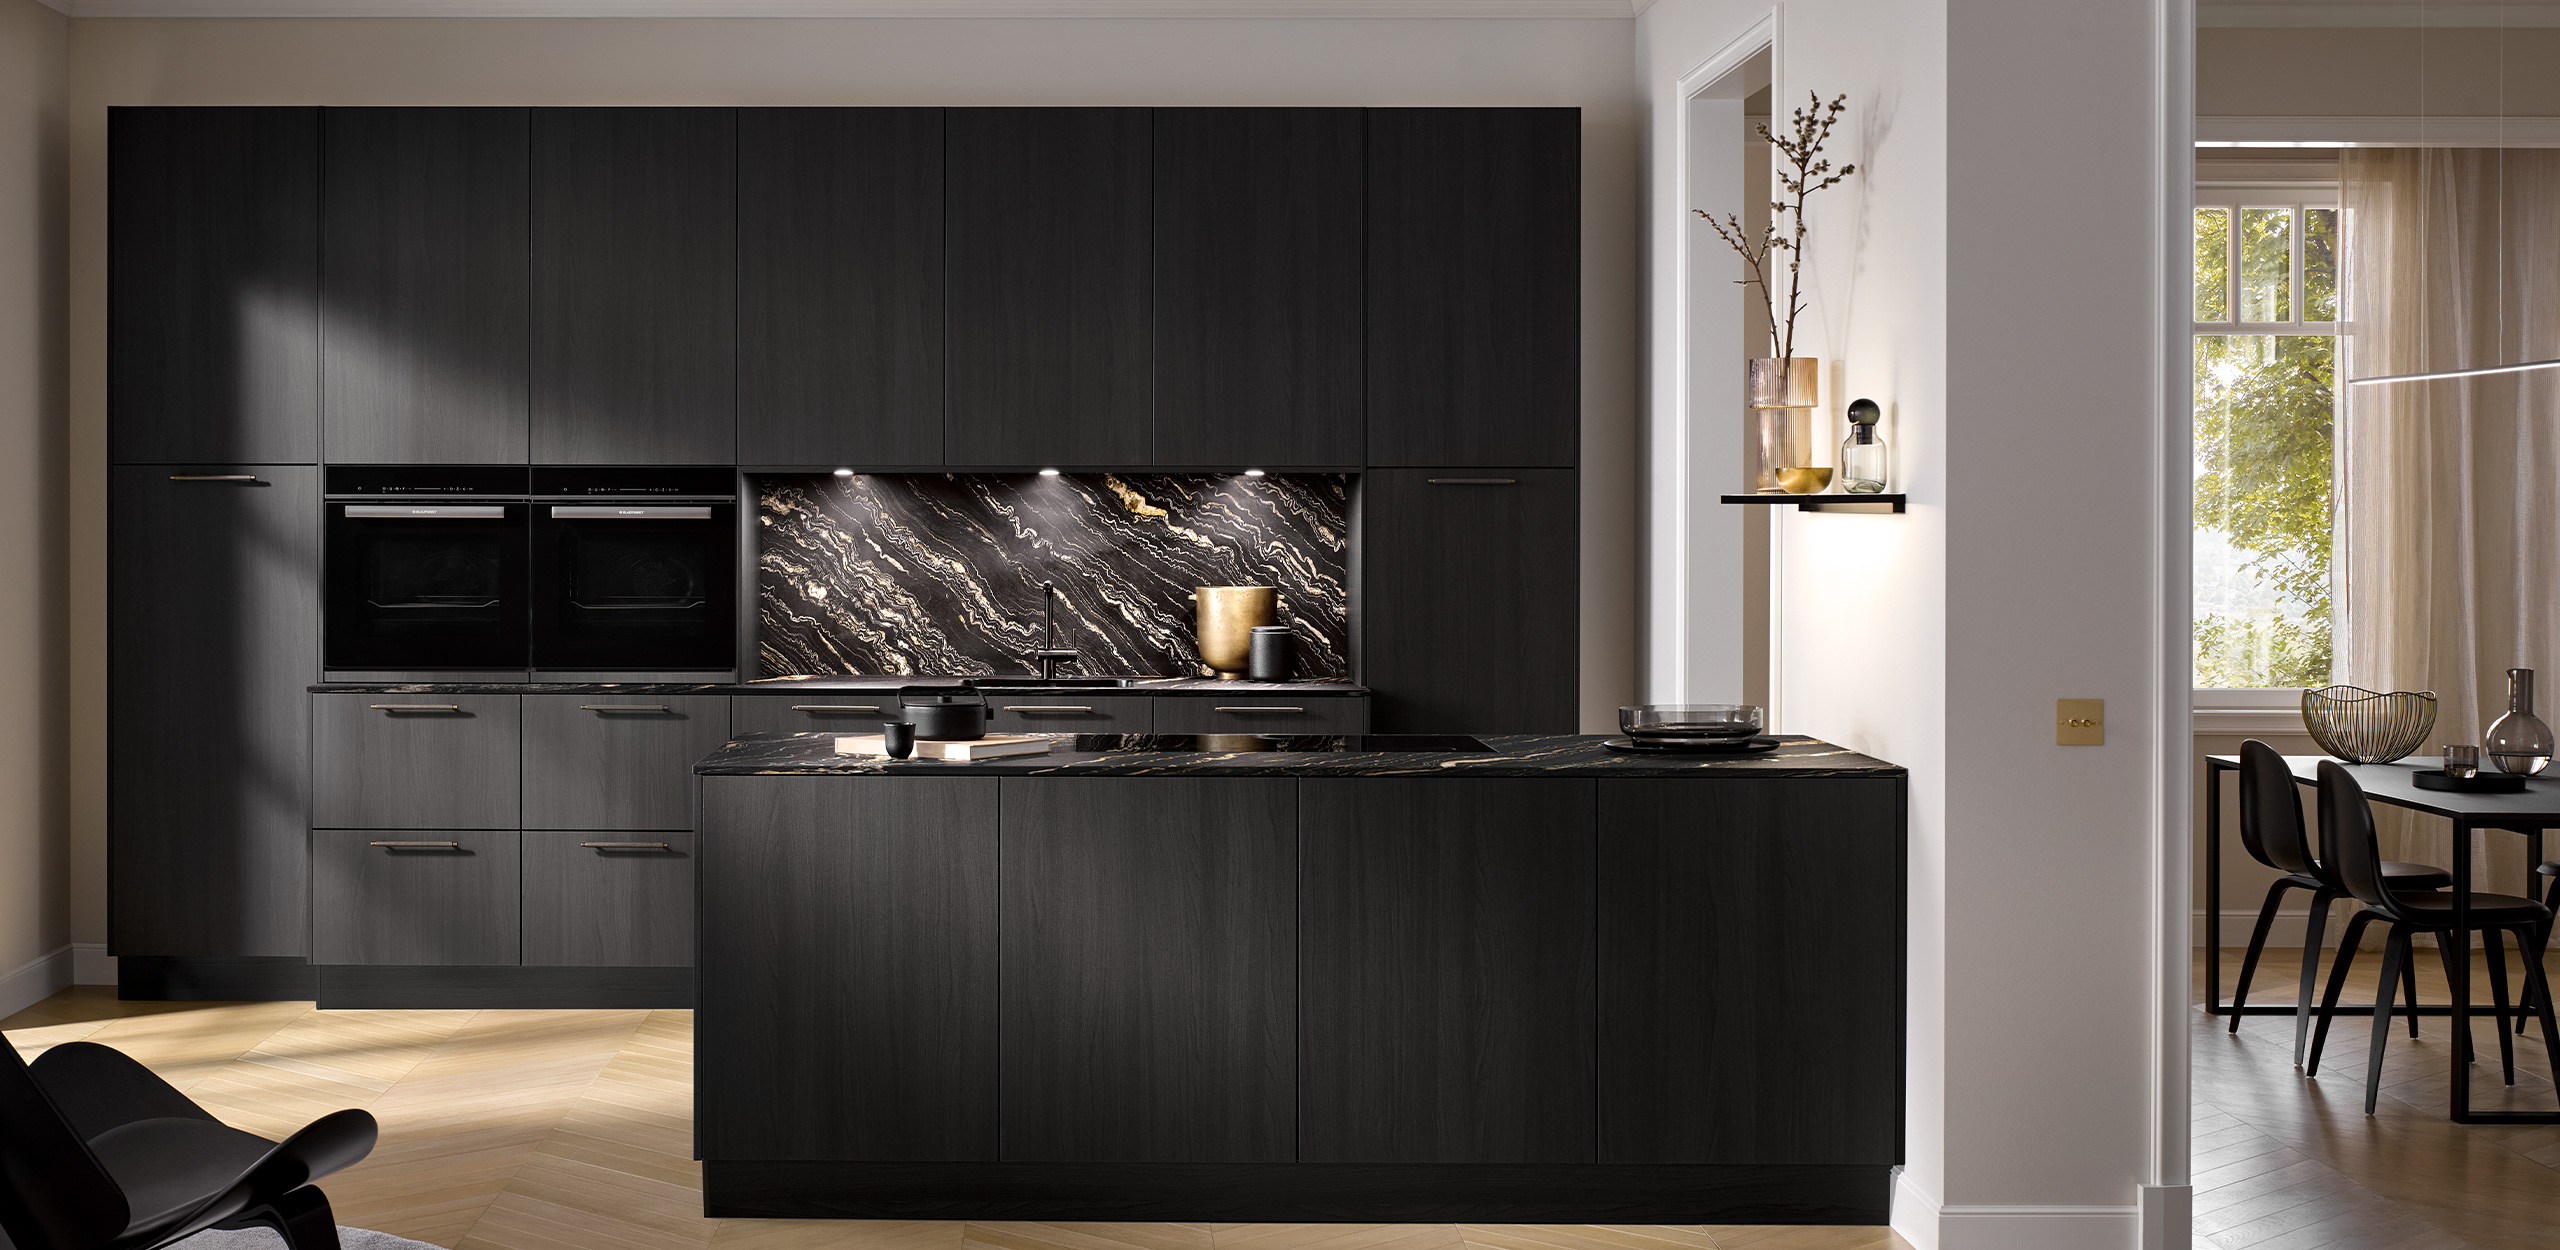 Imagen de una cocina en tono oscuro AV 2040 roble fino negro con barra americana